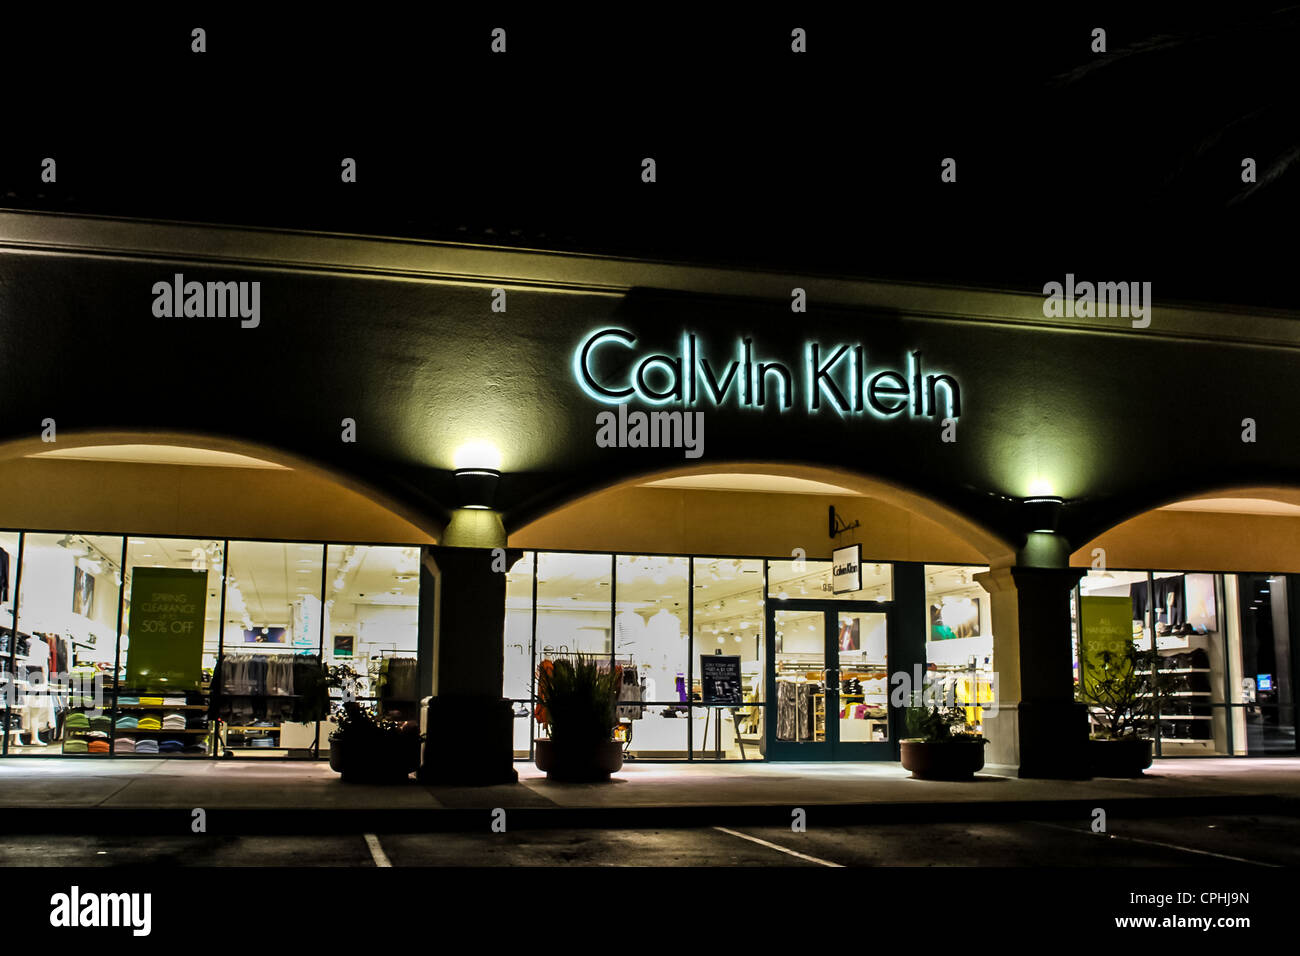 Calvin Klein outlet Store in Camarillo California at the Camarillo outlets  Stock Photo - Alamy